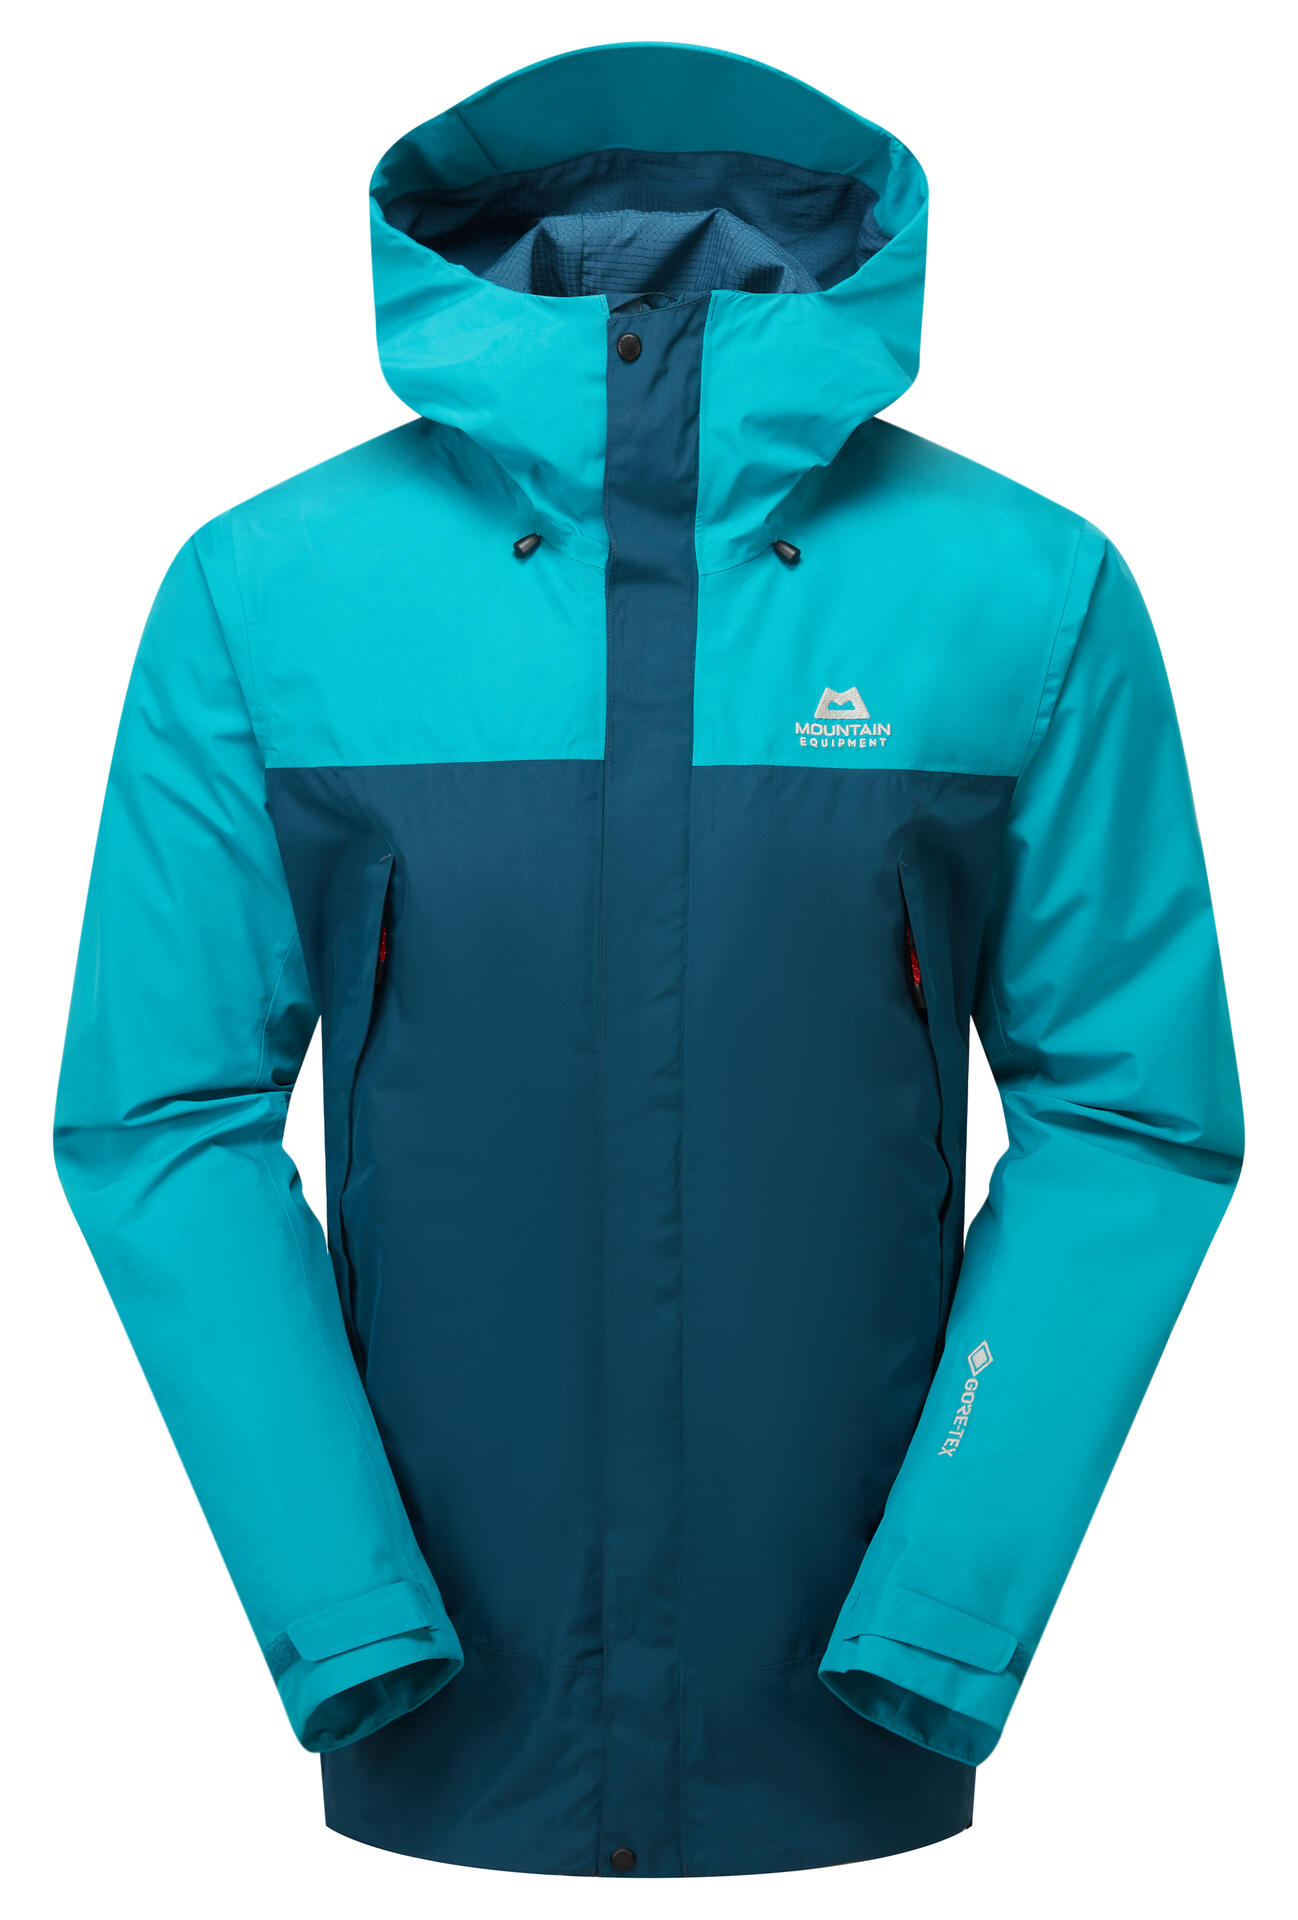 Mountain Equipment Nanda Devi Jacket Men'S Barva: Majolica Blue/Topaz, Velikost: M